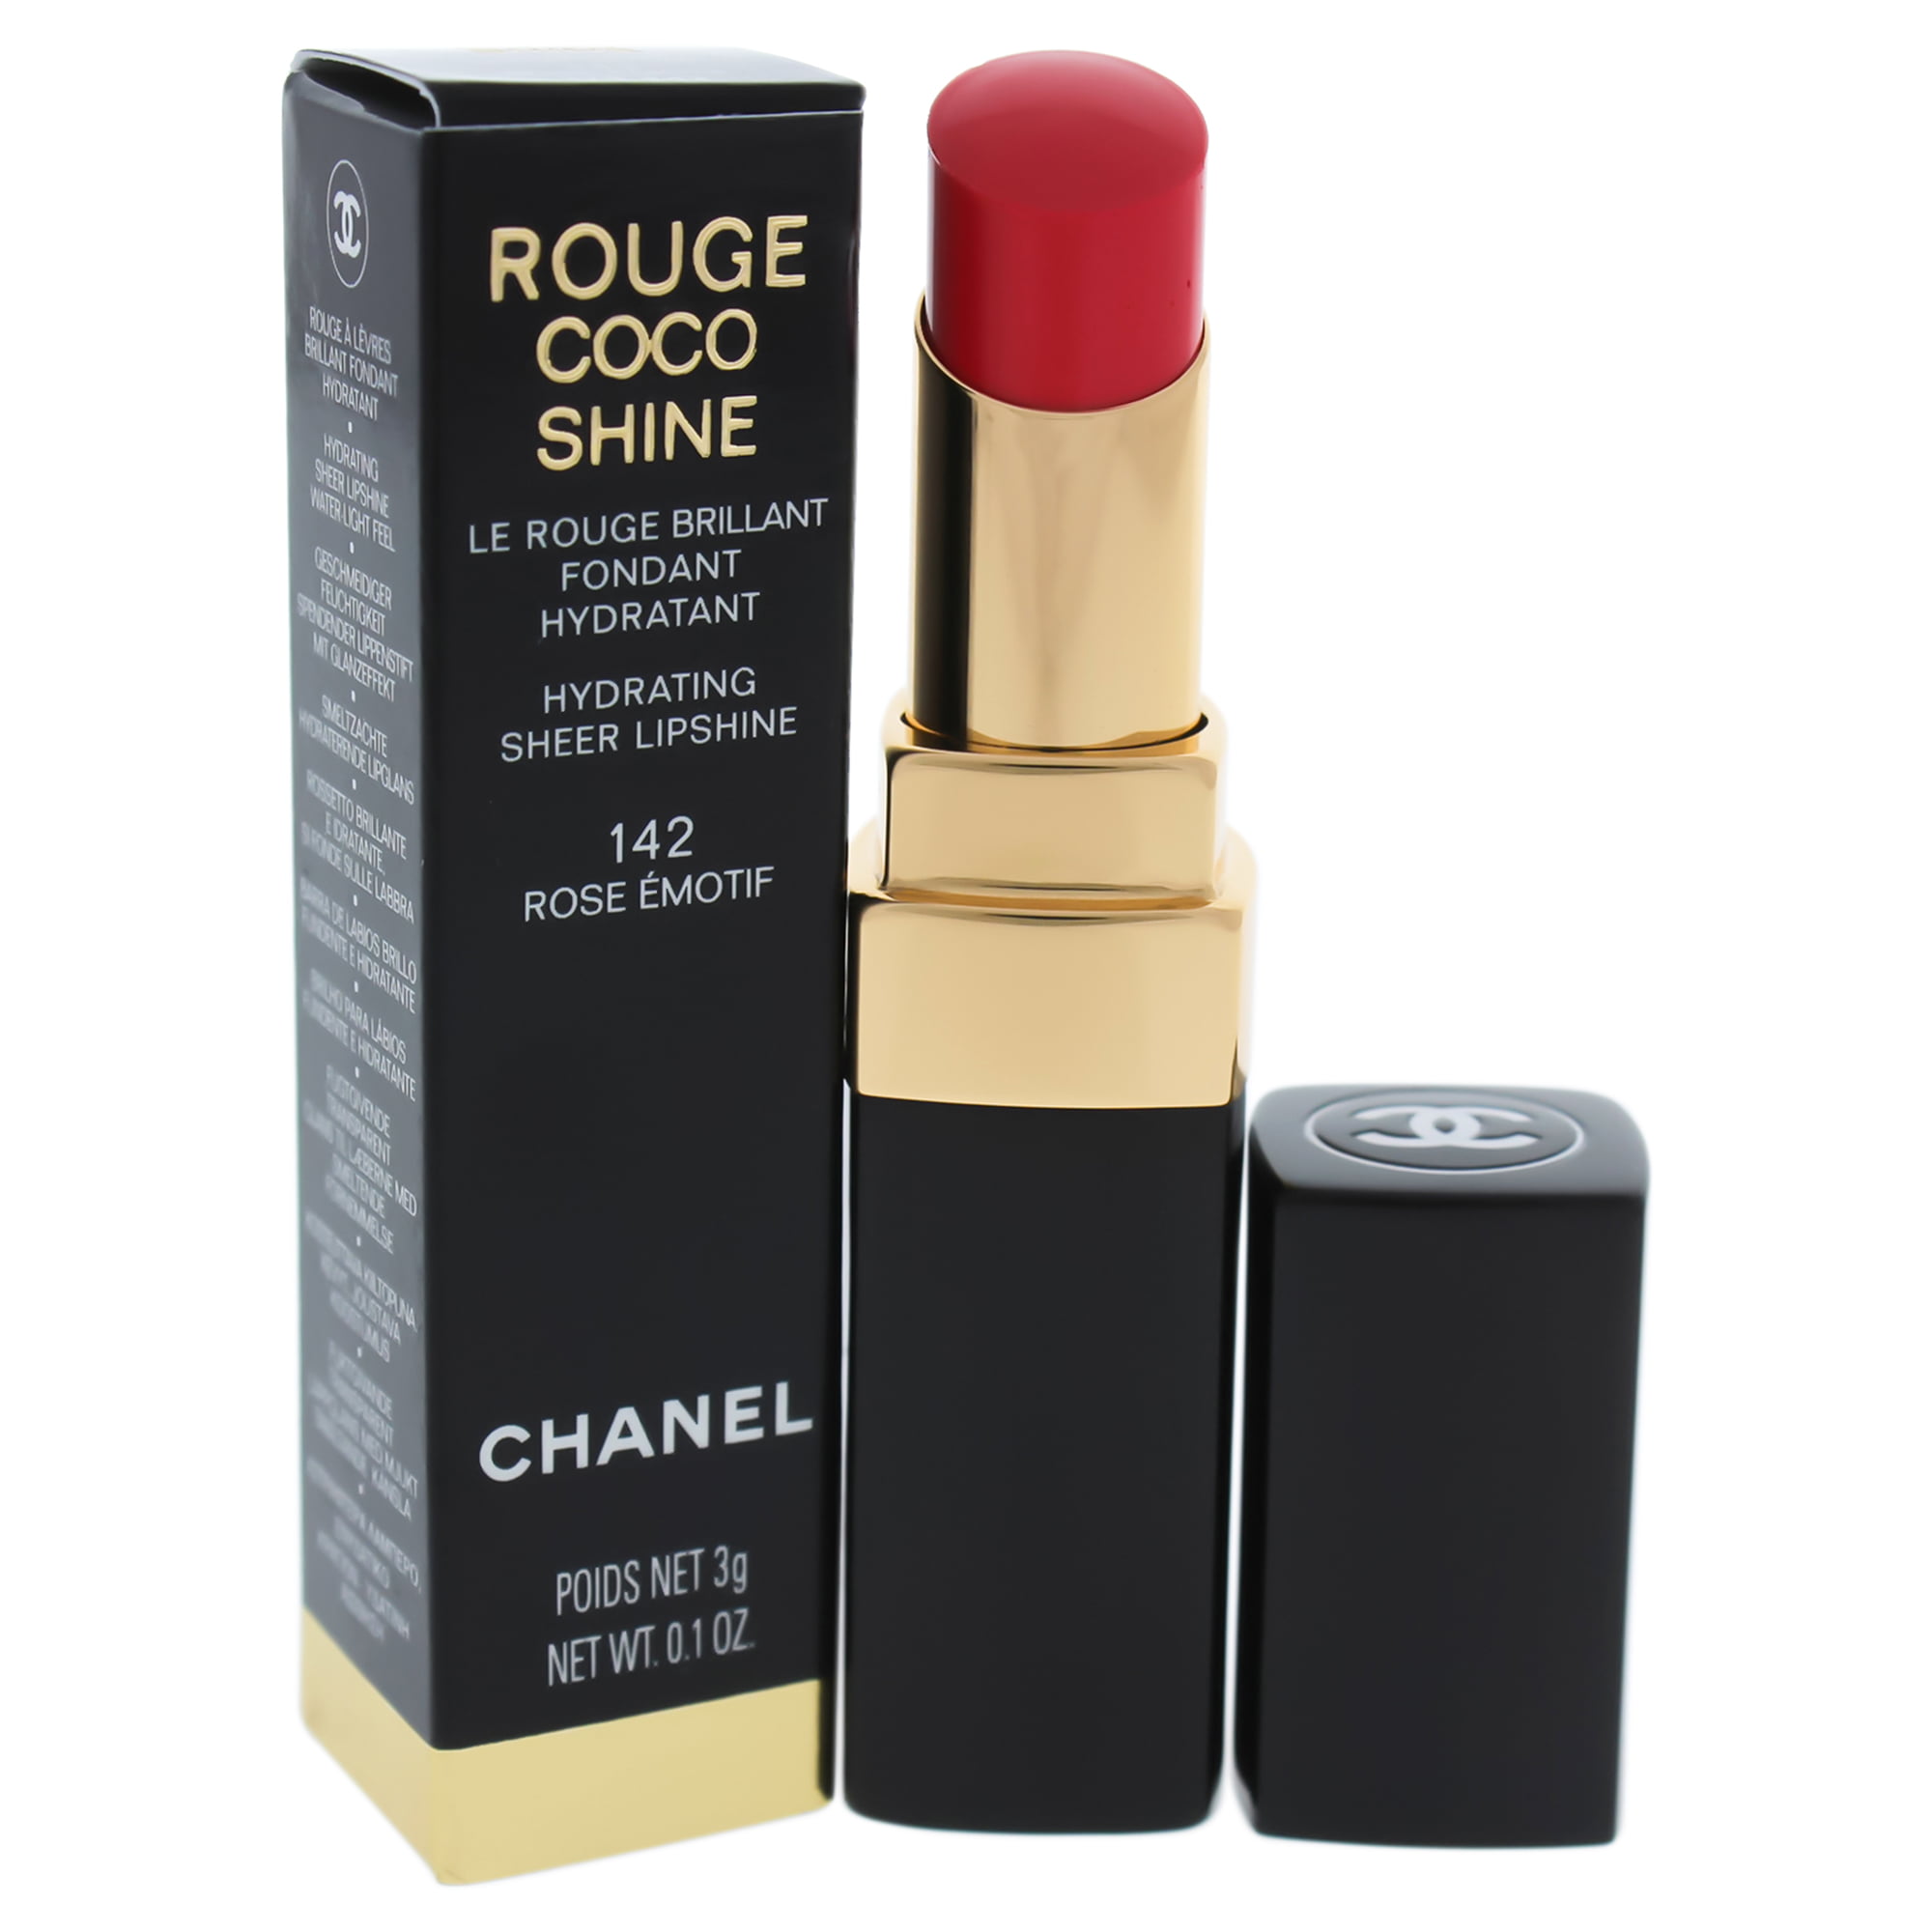 Chanel Emotion (92) Rouge Coco Shine Hydrating Sheer Lipshine